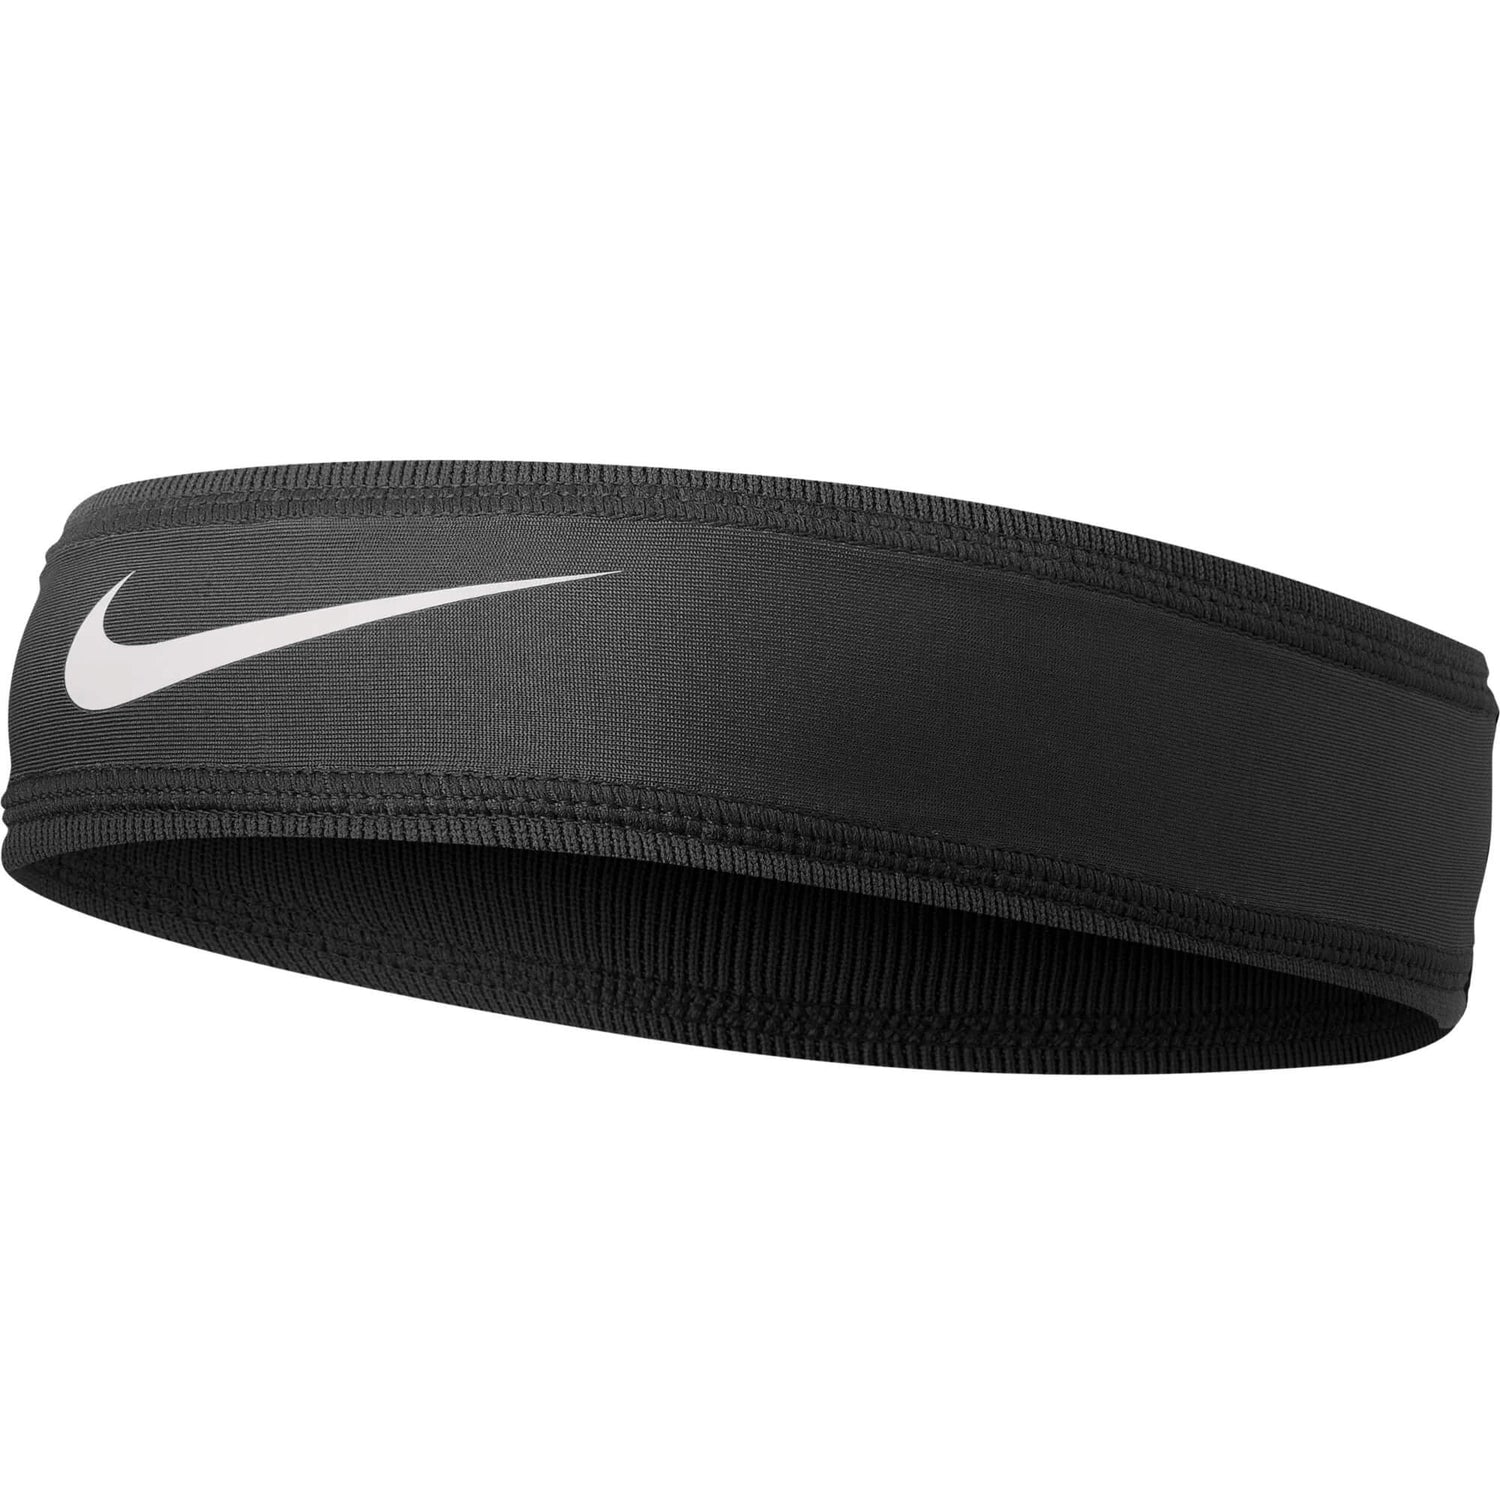 Nike Lightweight Headband Black (Lateral)